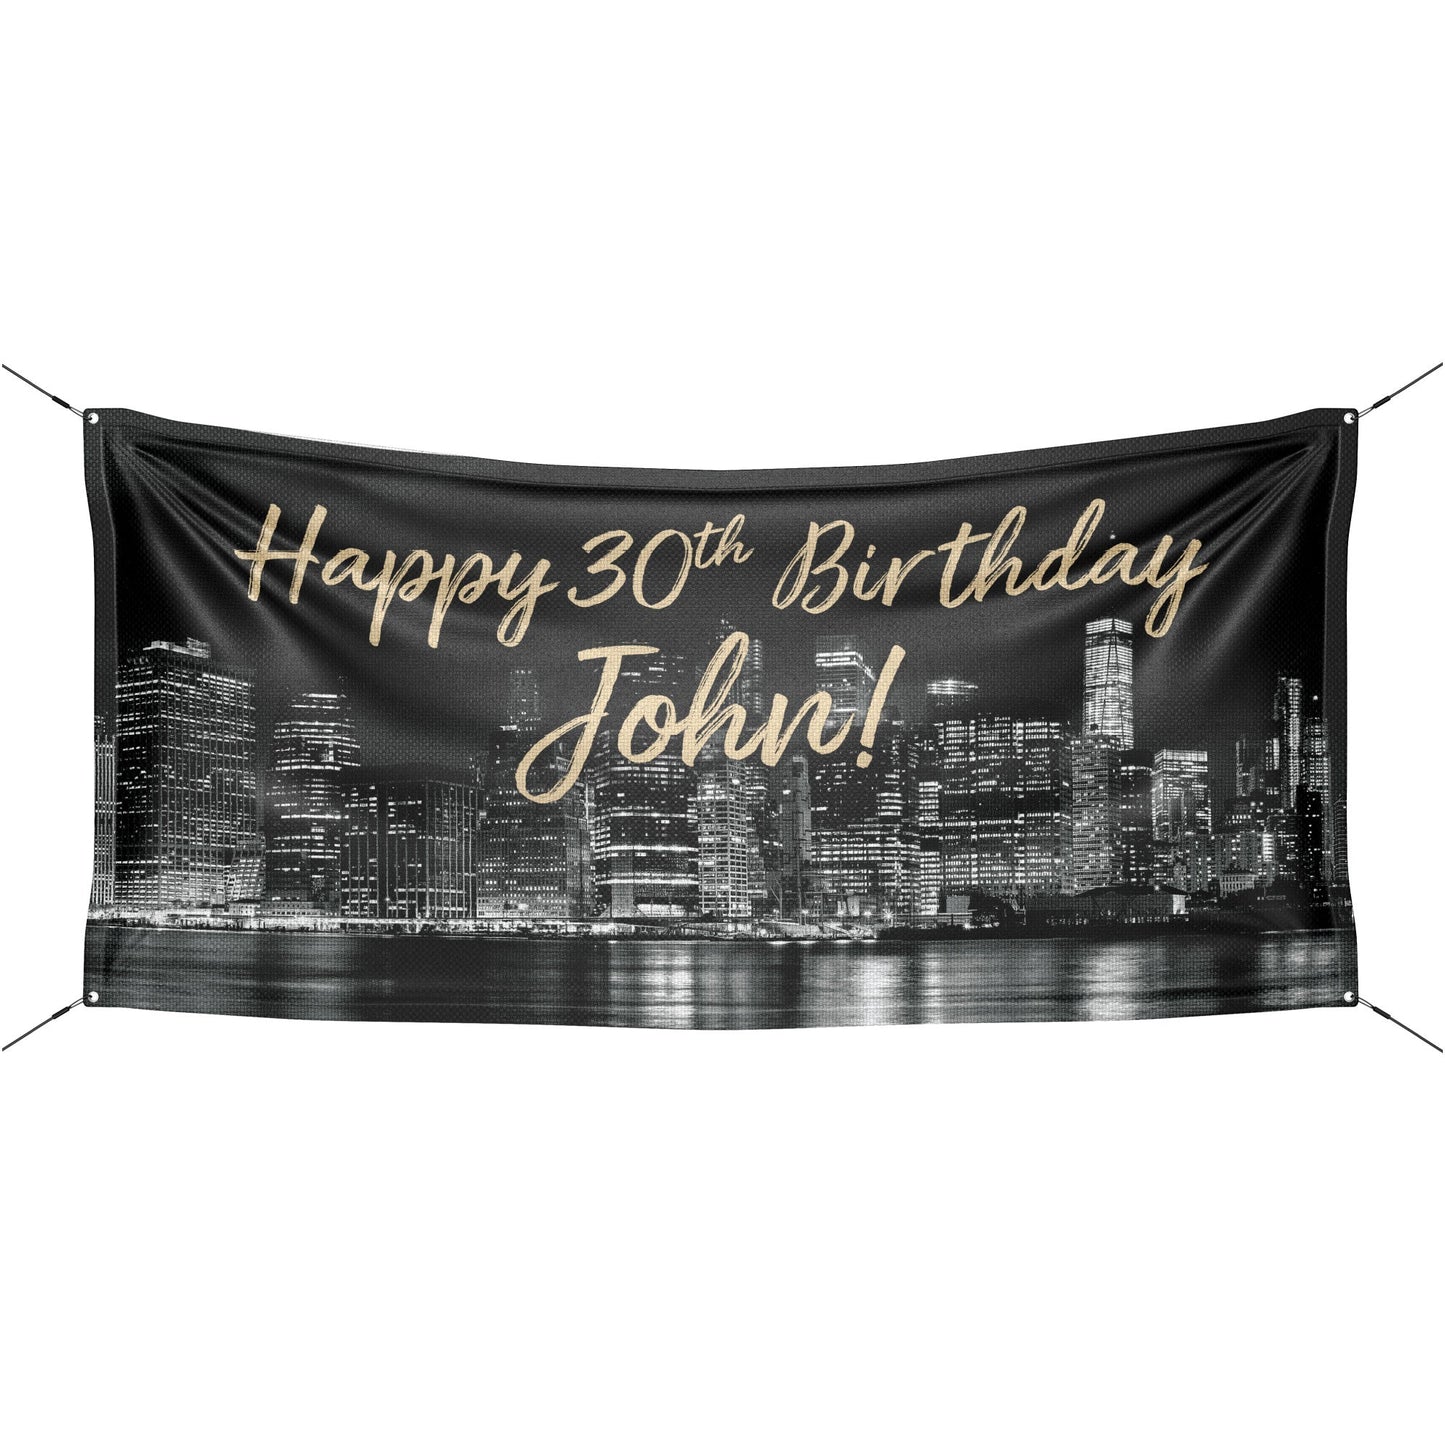 New York Themed Birthday Banner